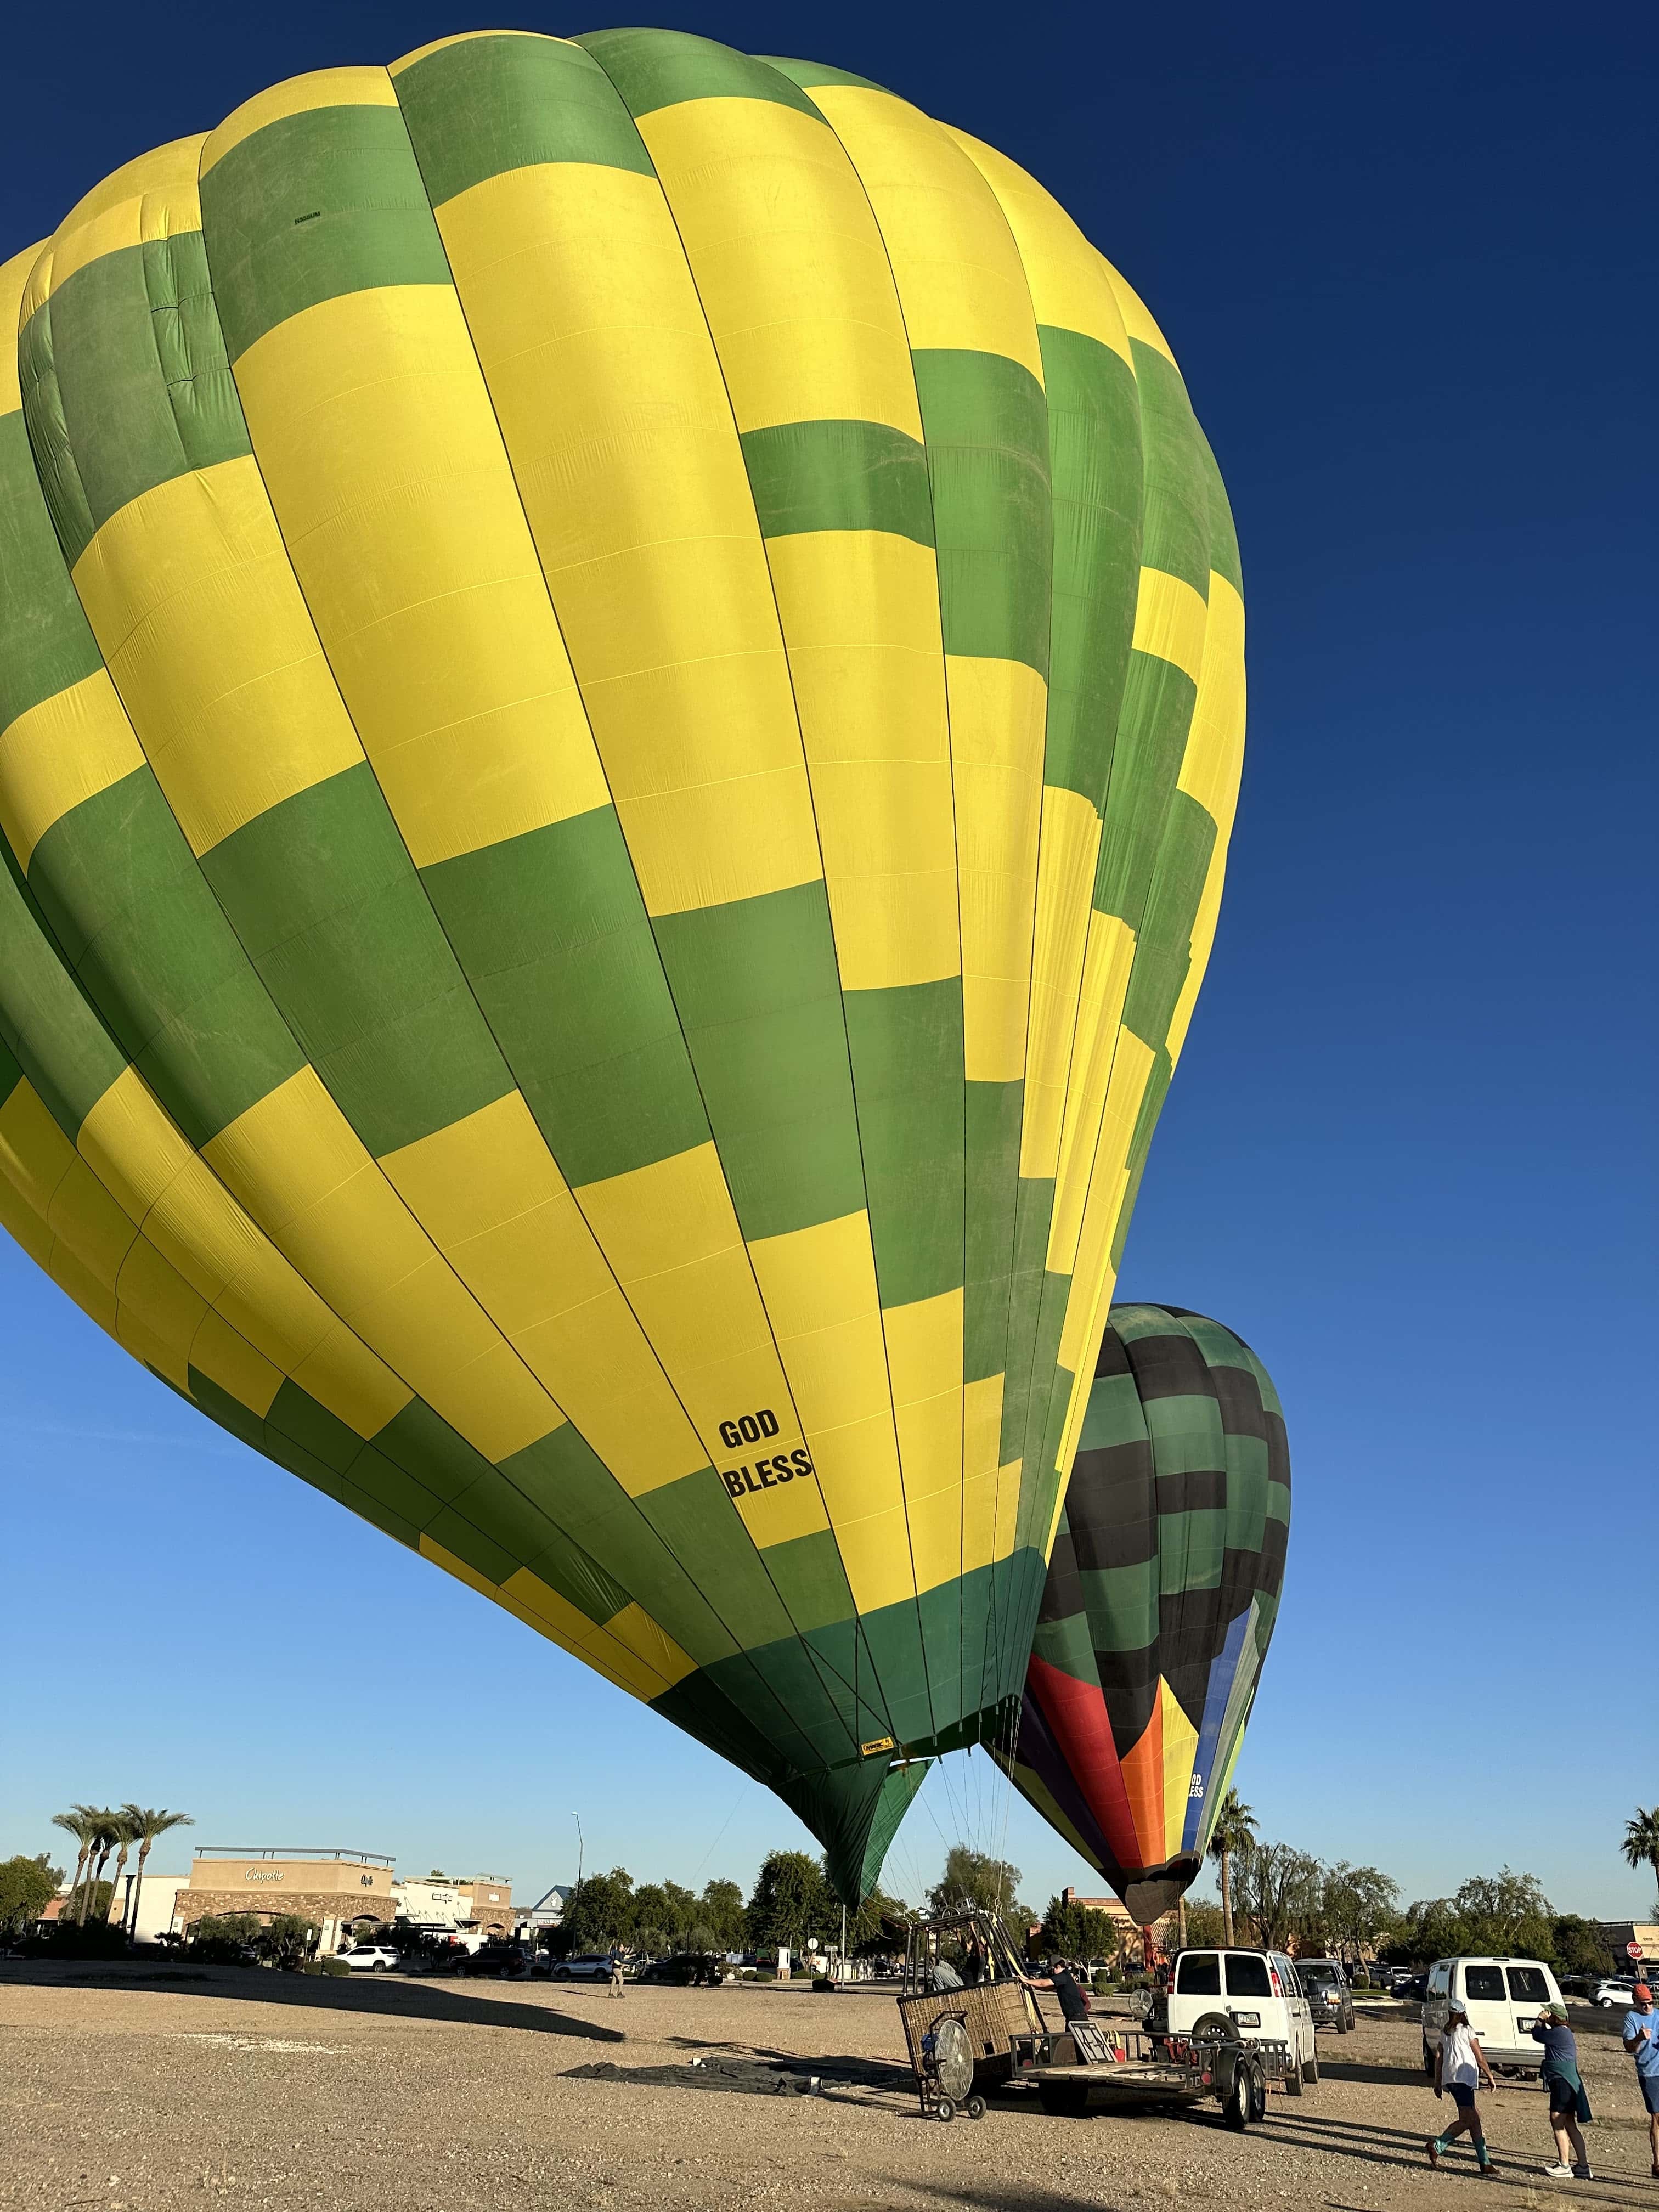 Phoenix Hot Air Balloon Rides - Aerogelic Ballooning, US, hot air balloon s